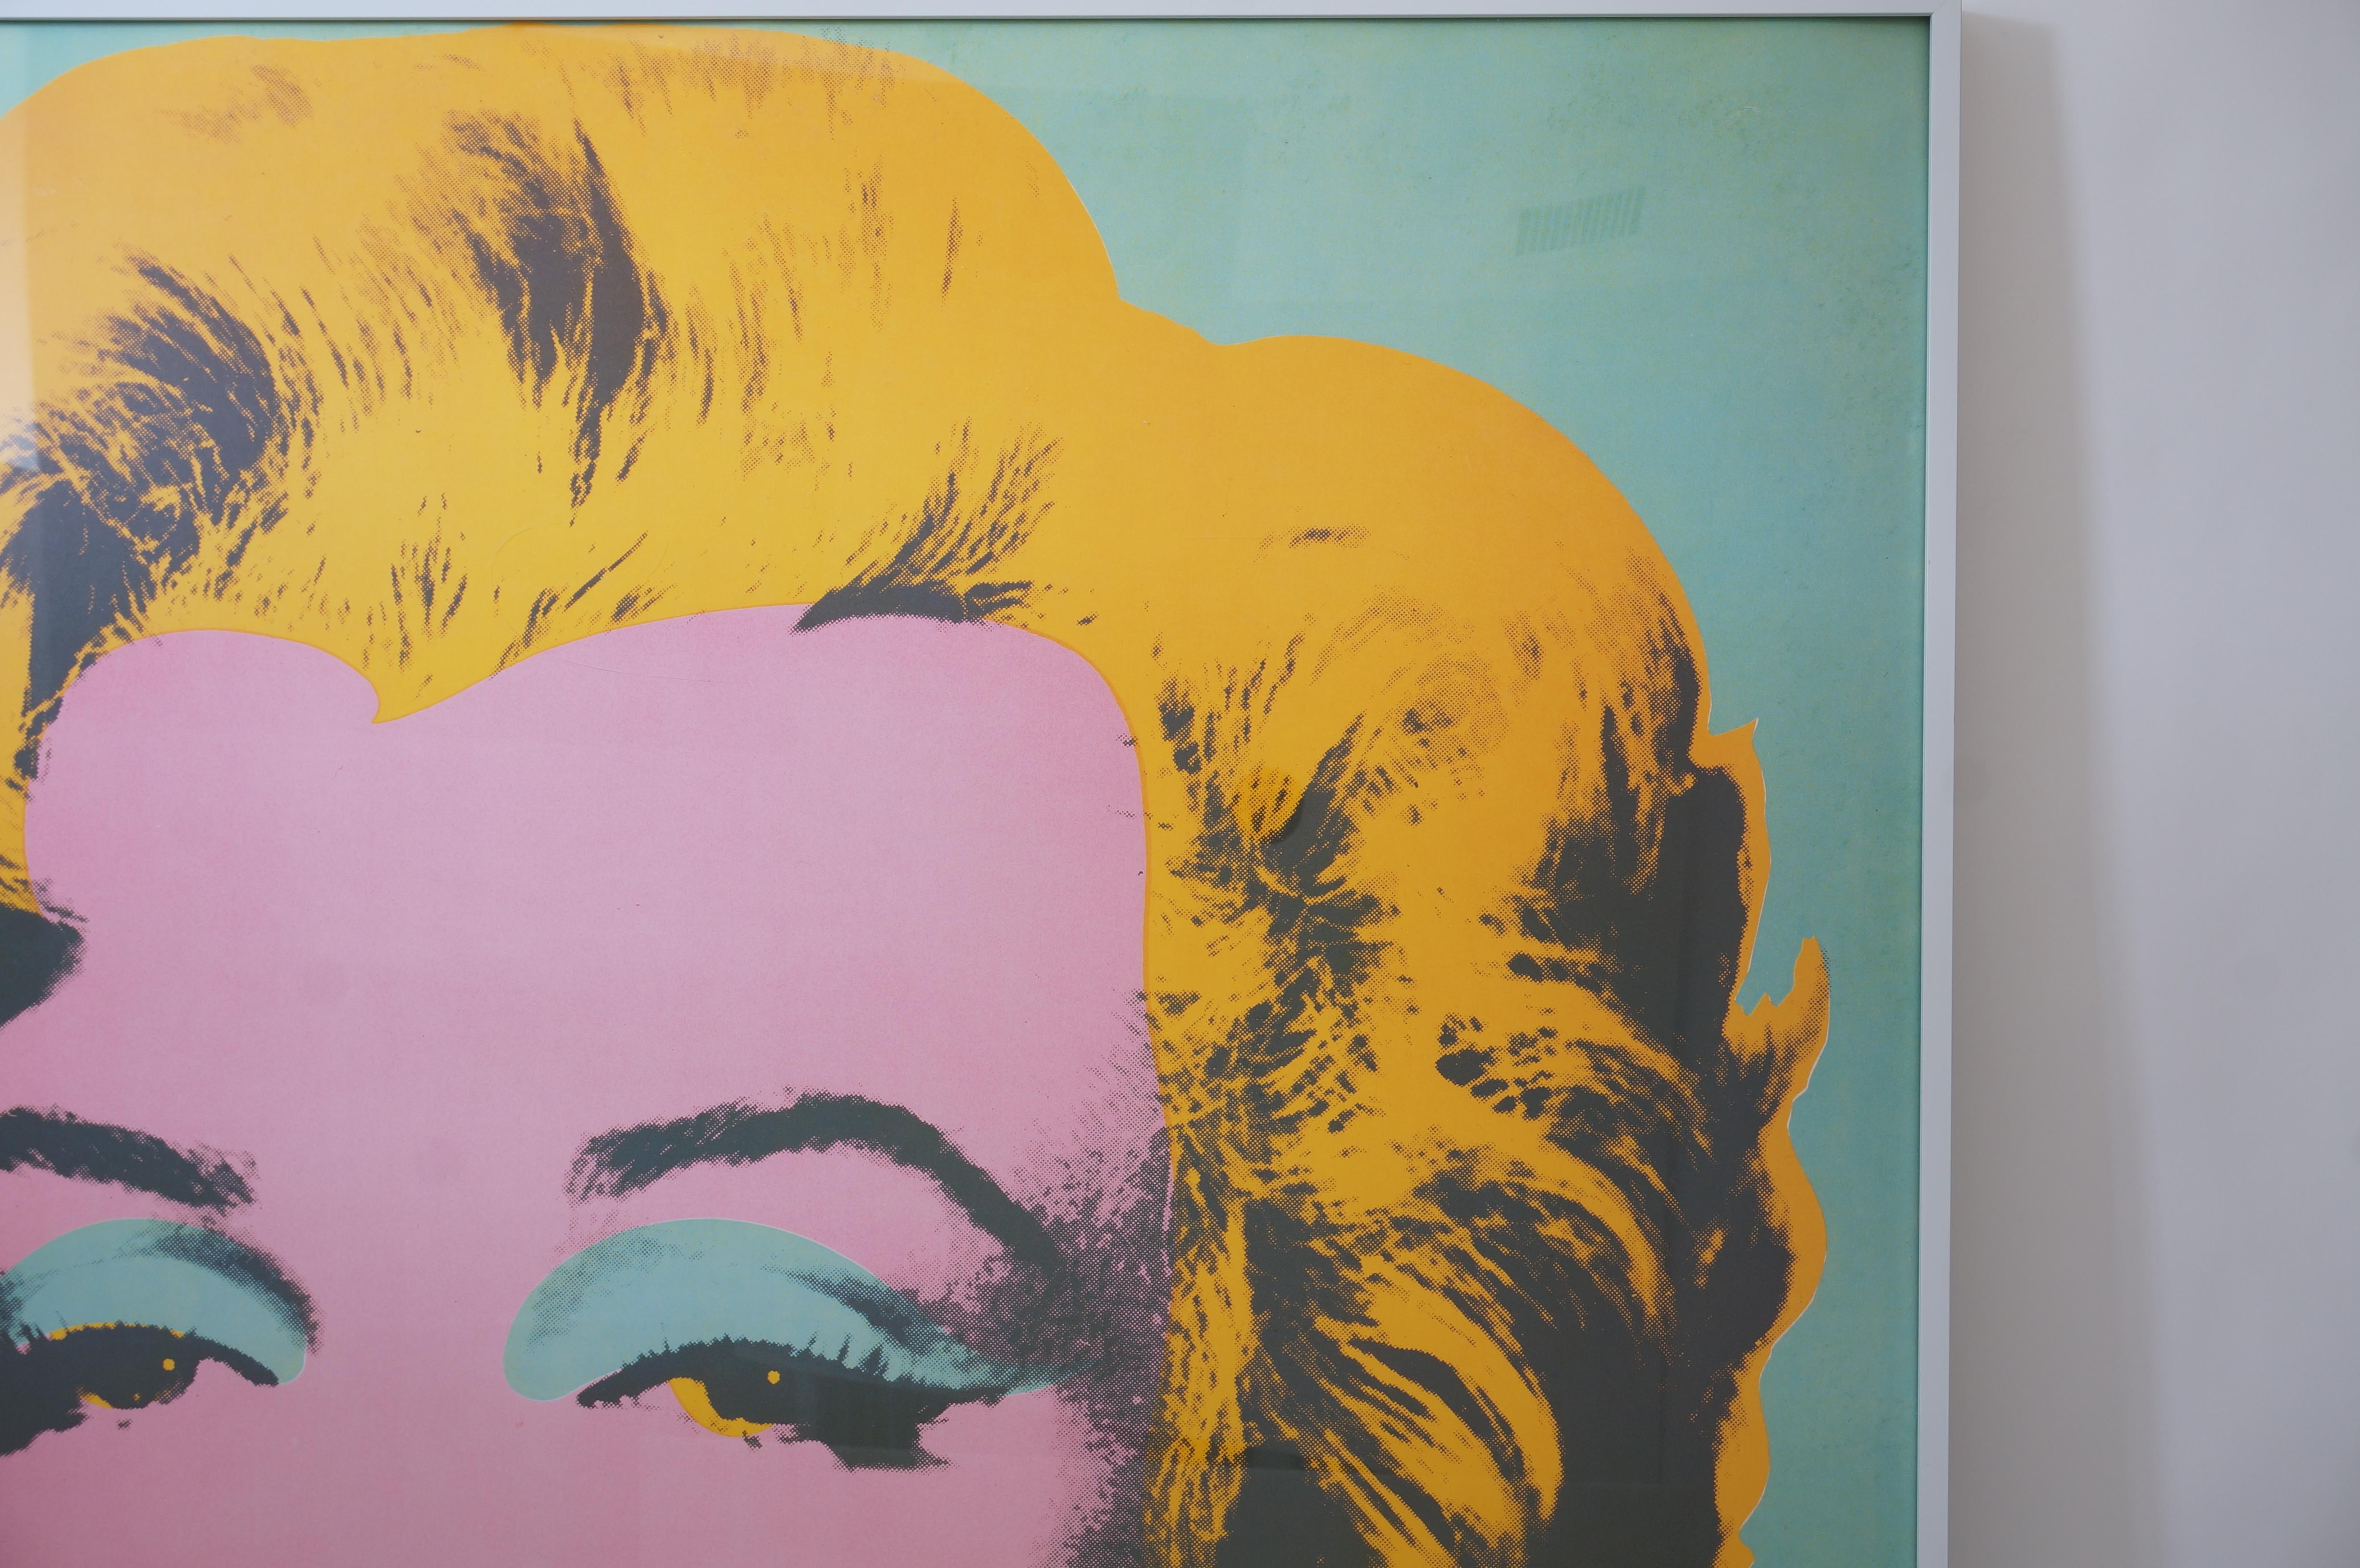 German Marilyn Monre Print by the Andy Warhol Foundation